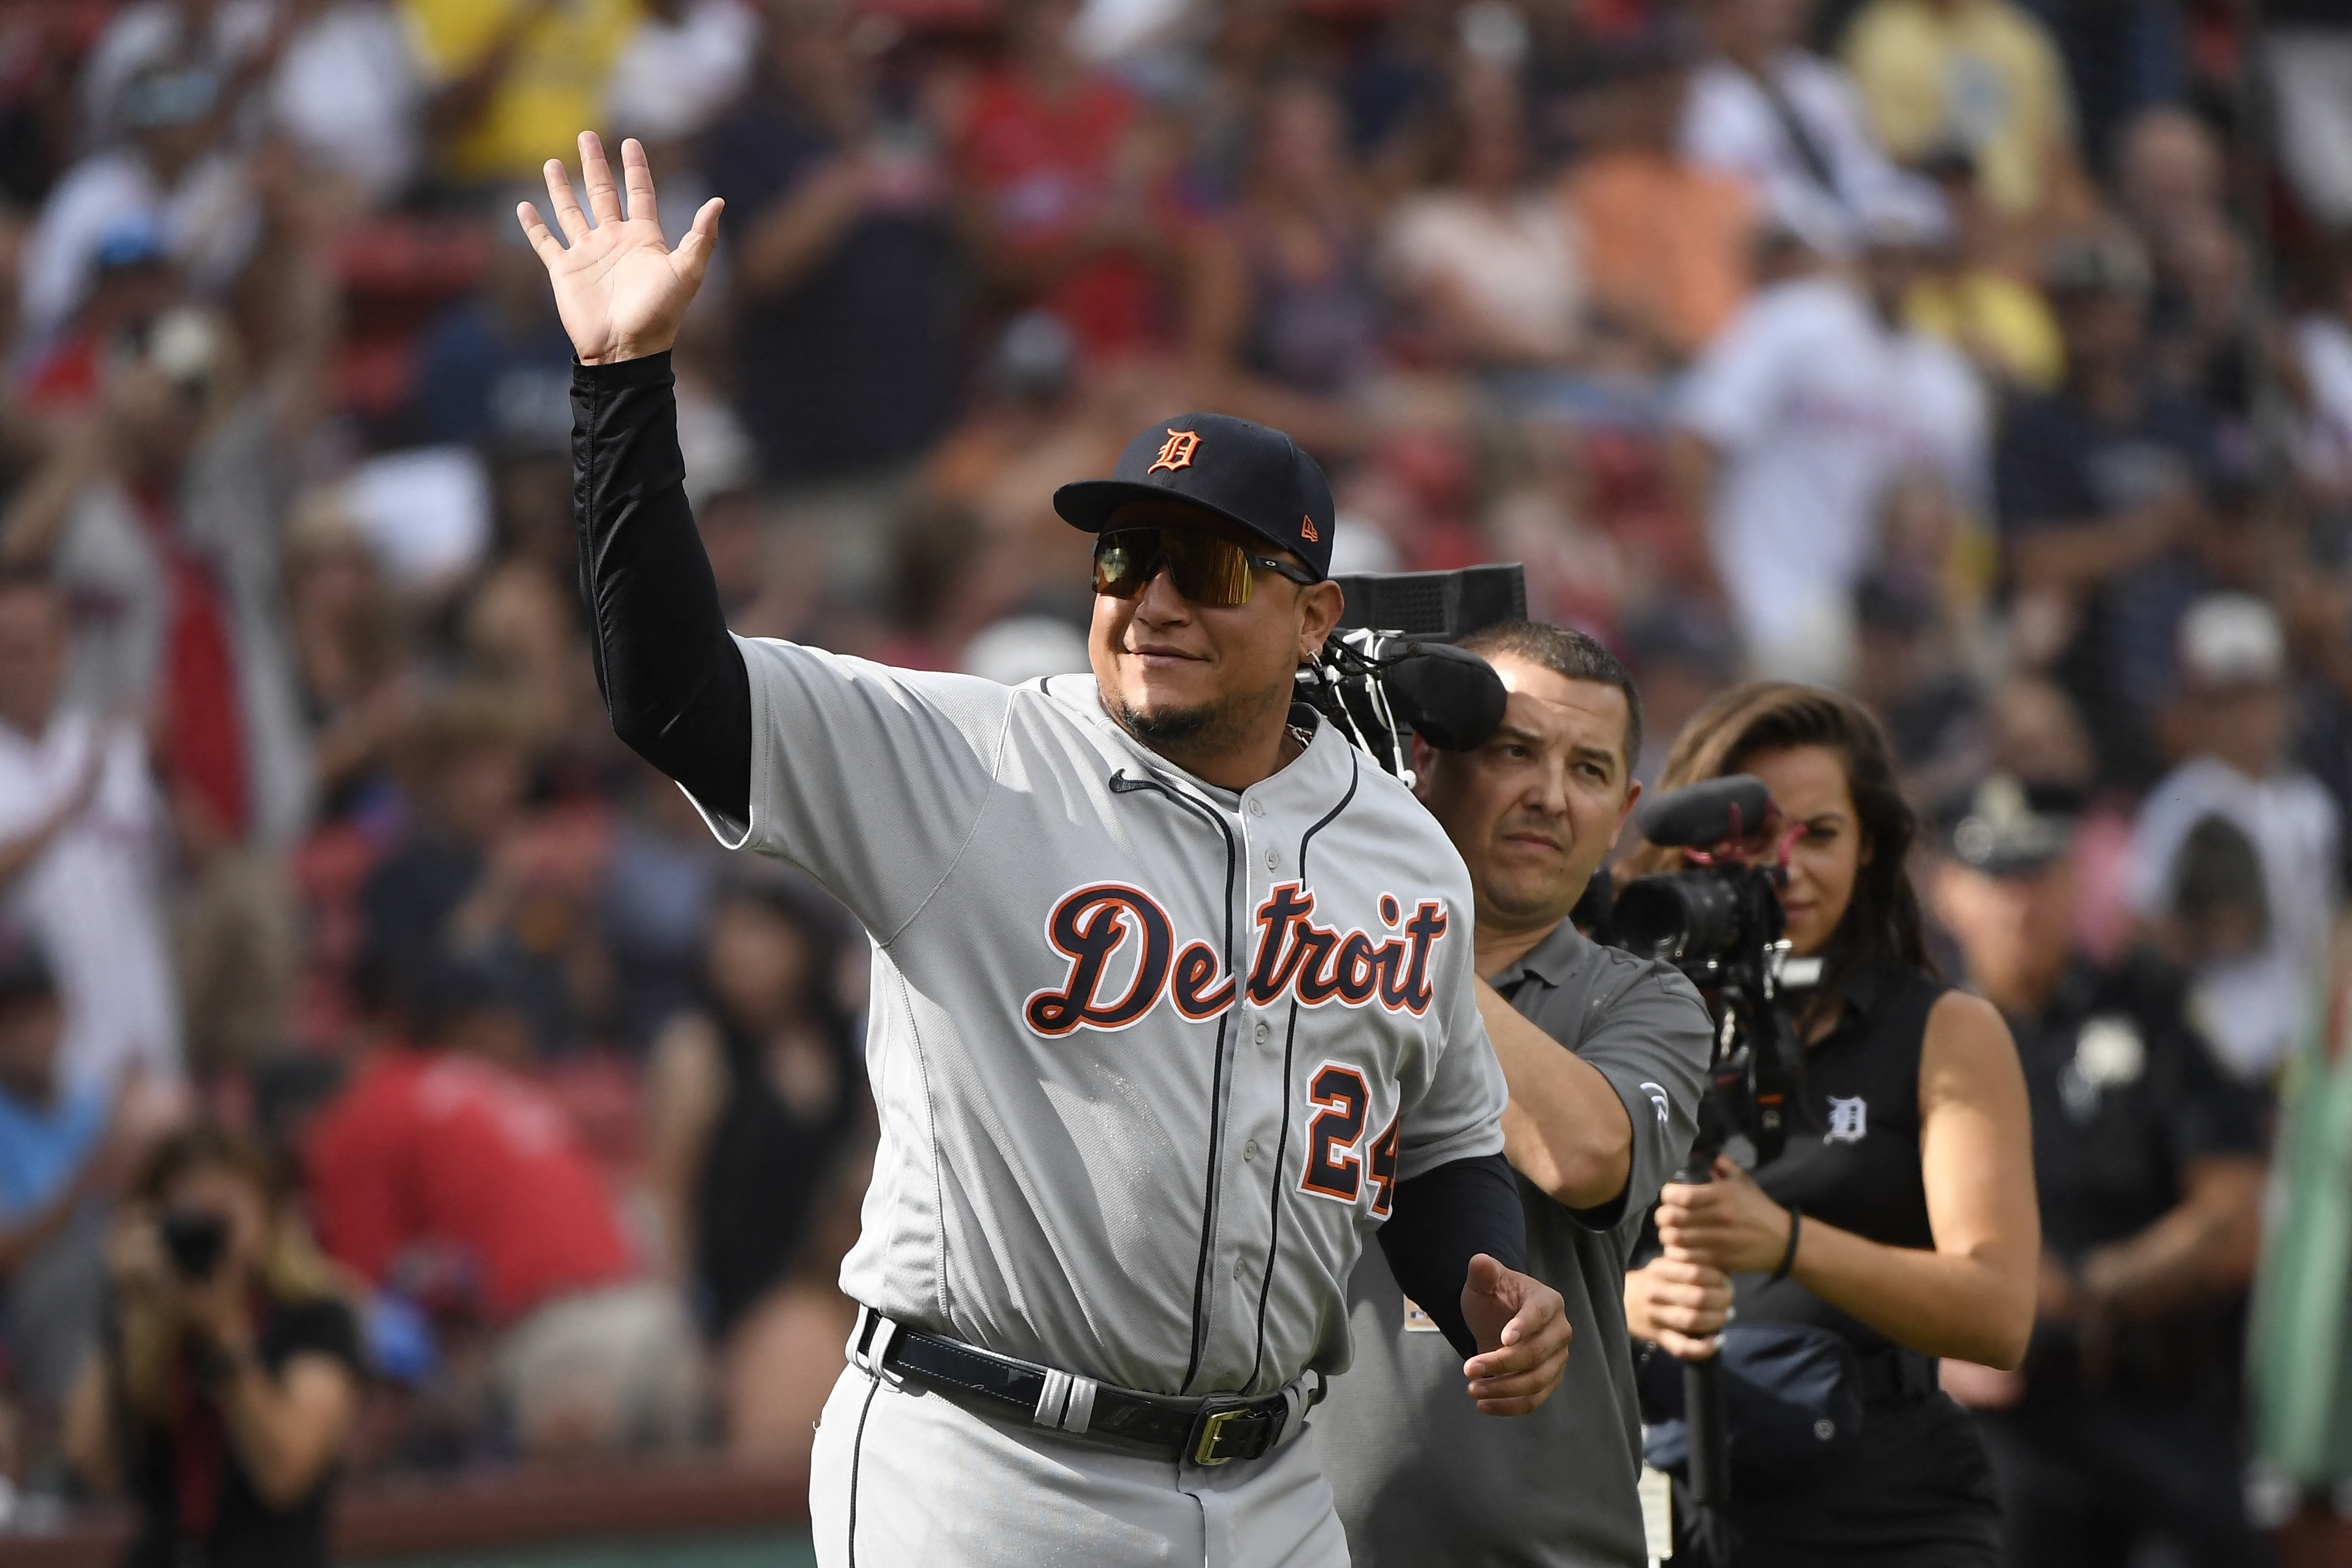 Detroit Tigers get Nick Maton walk-off HR to top Pirates, 8-7